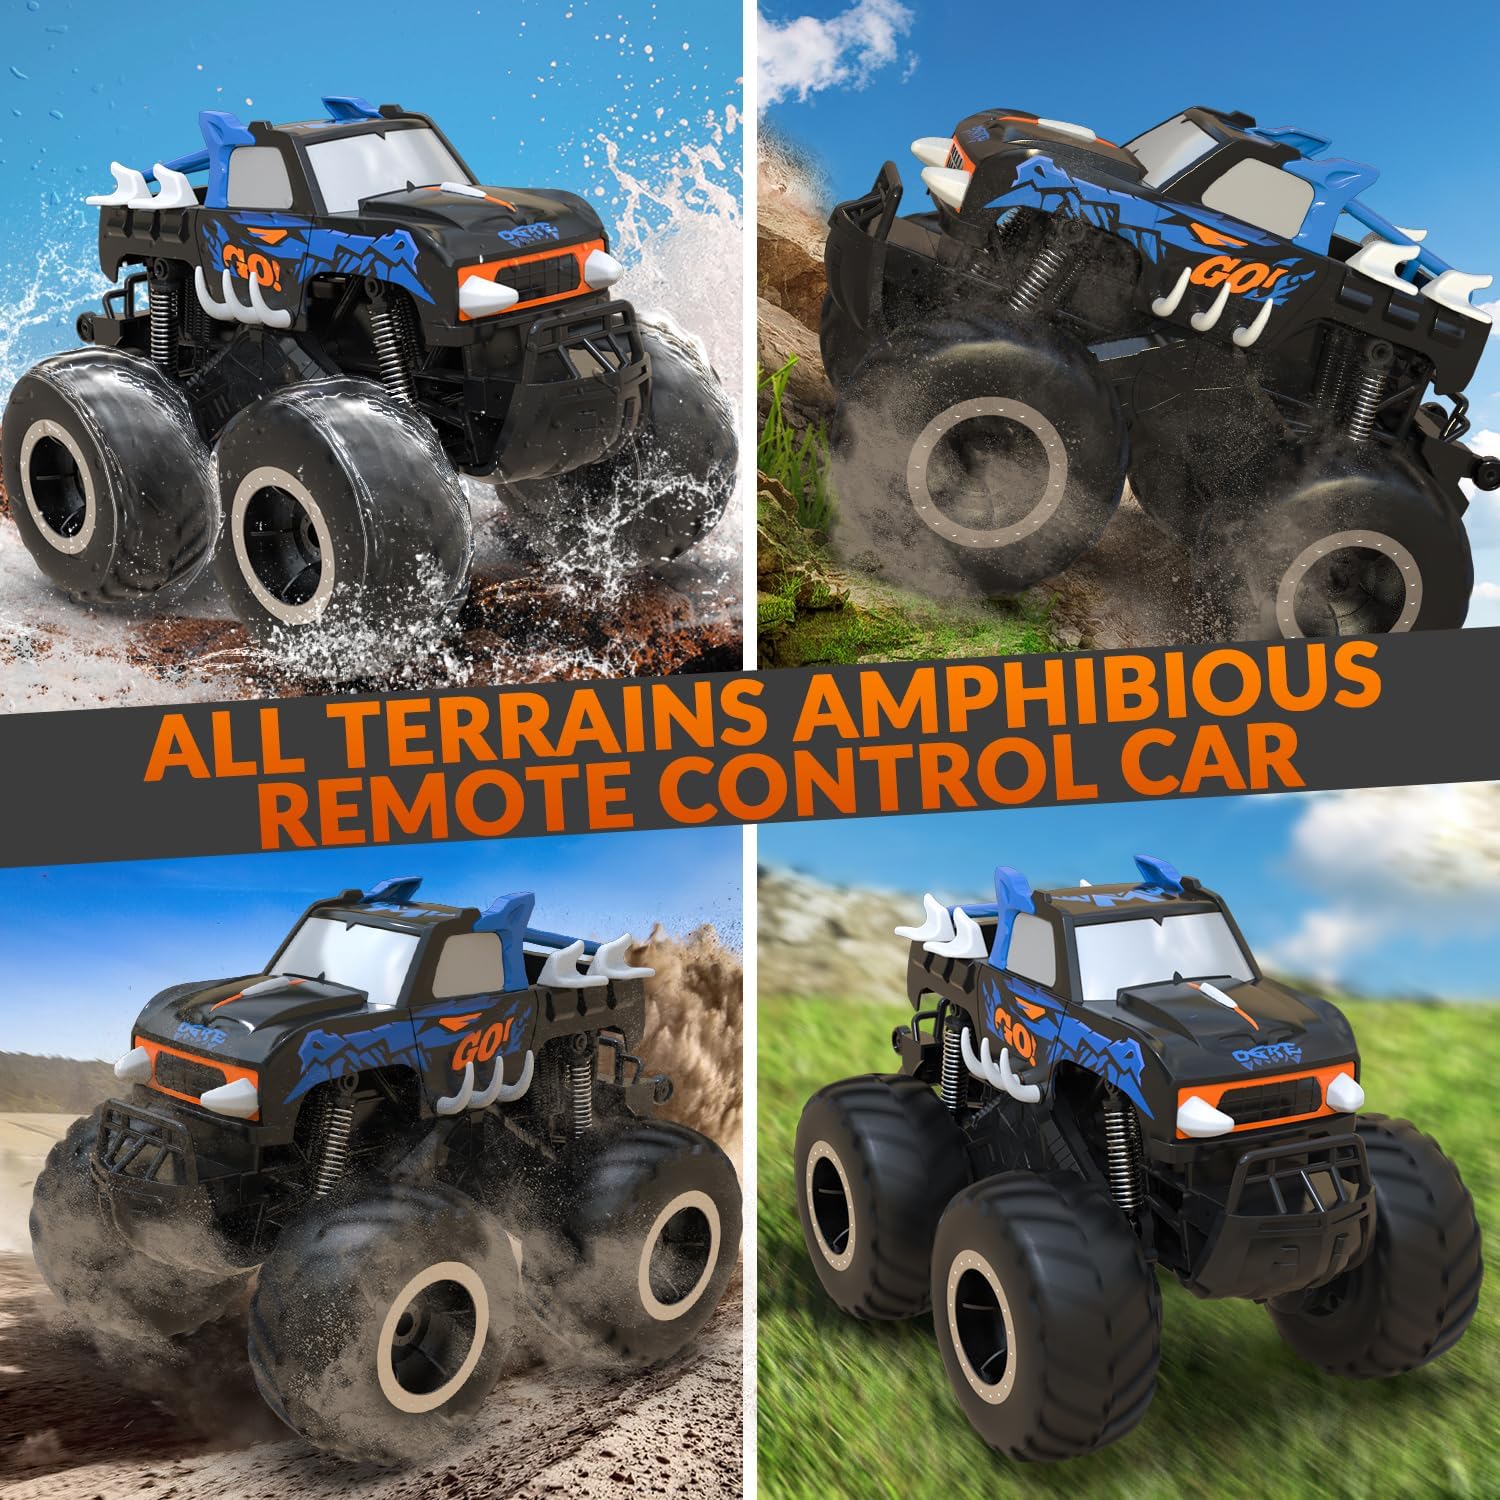 STEMTRON Amphibious Remote Control Car Toys: The Ultimate All-Terrain Fun